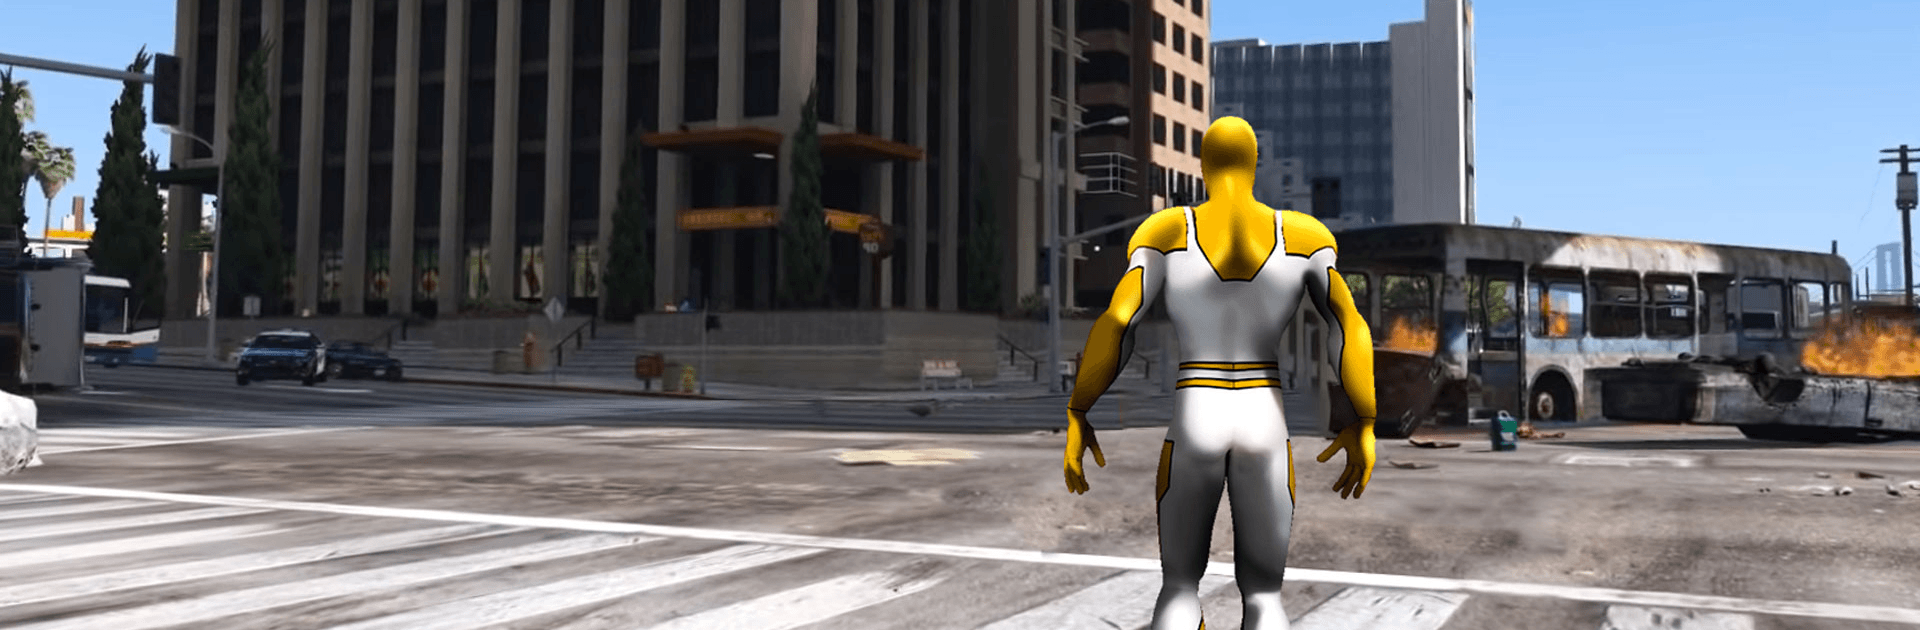 Play Hero Rope: City Battle Online